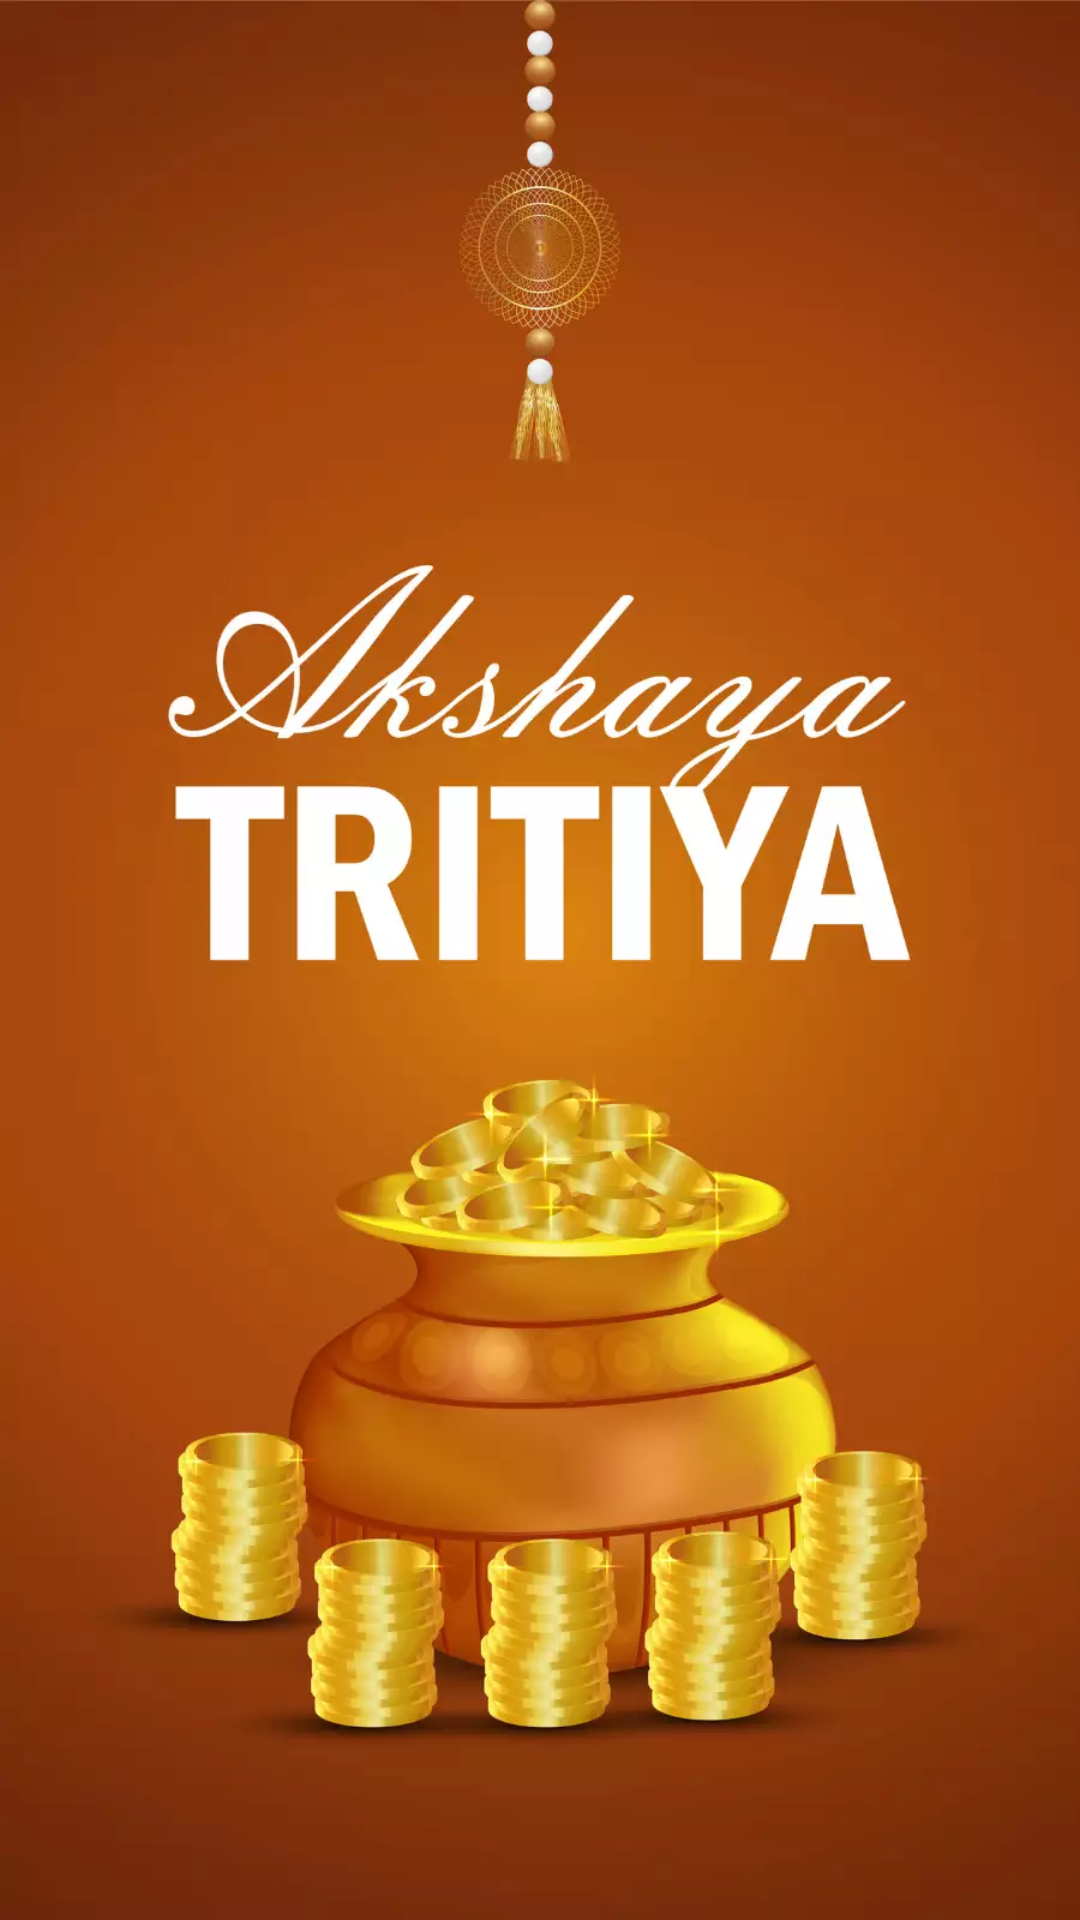 5 things to buy this Akshaya Tritiya other than &lsquo;Gold&rsquo;
